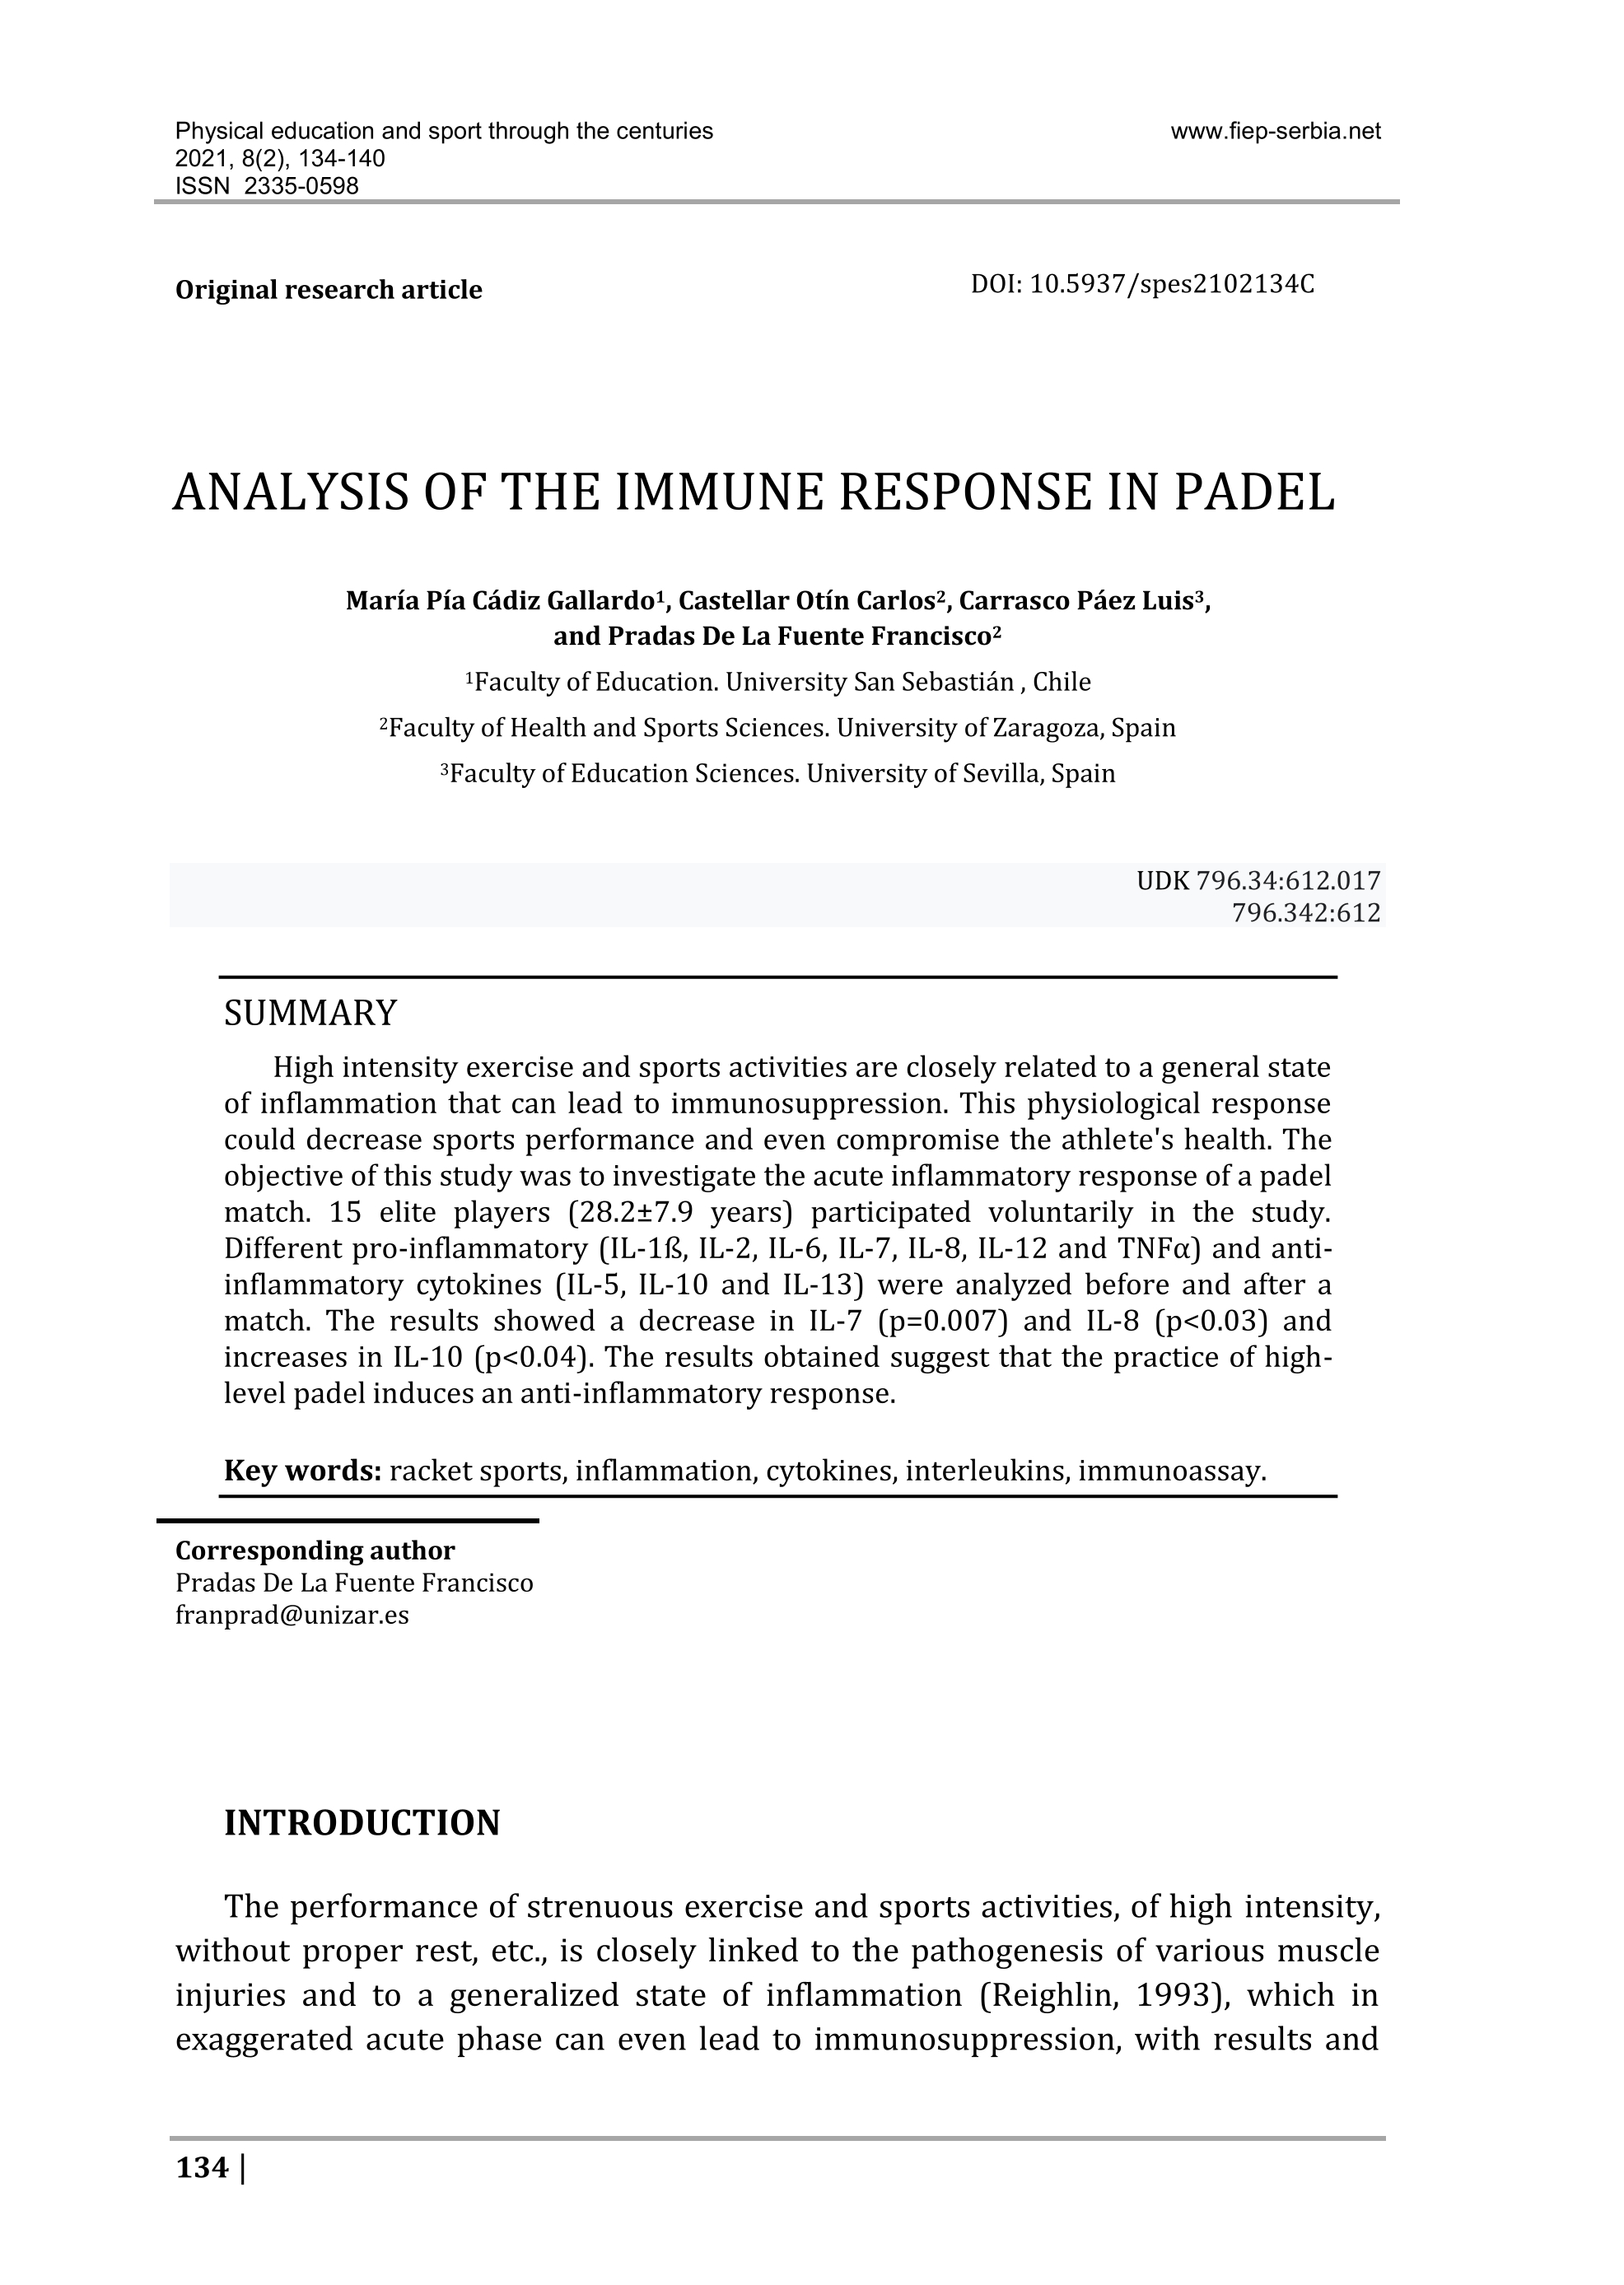 Analysis of the immune response in padel